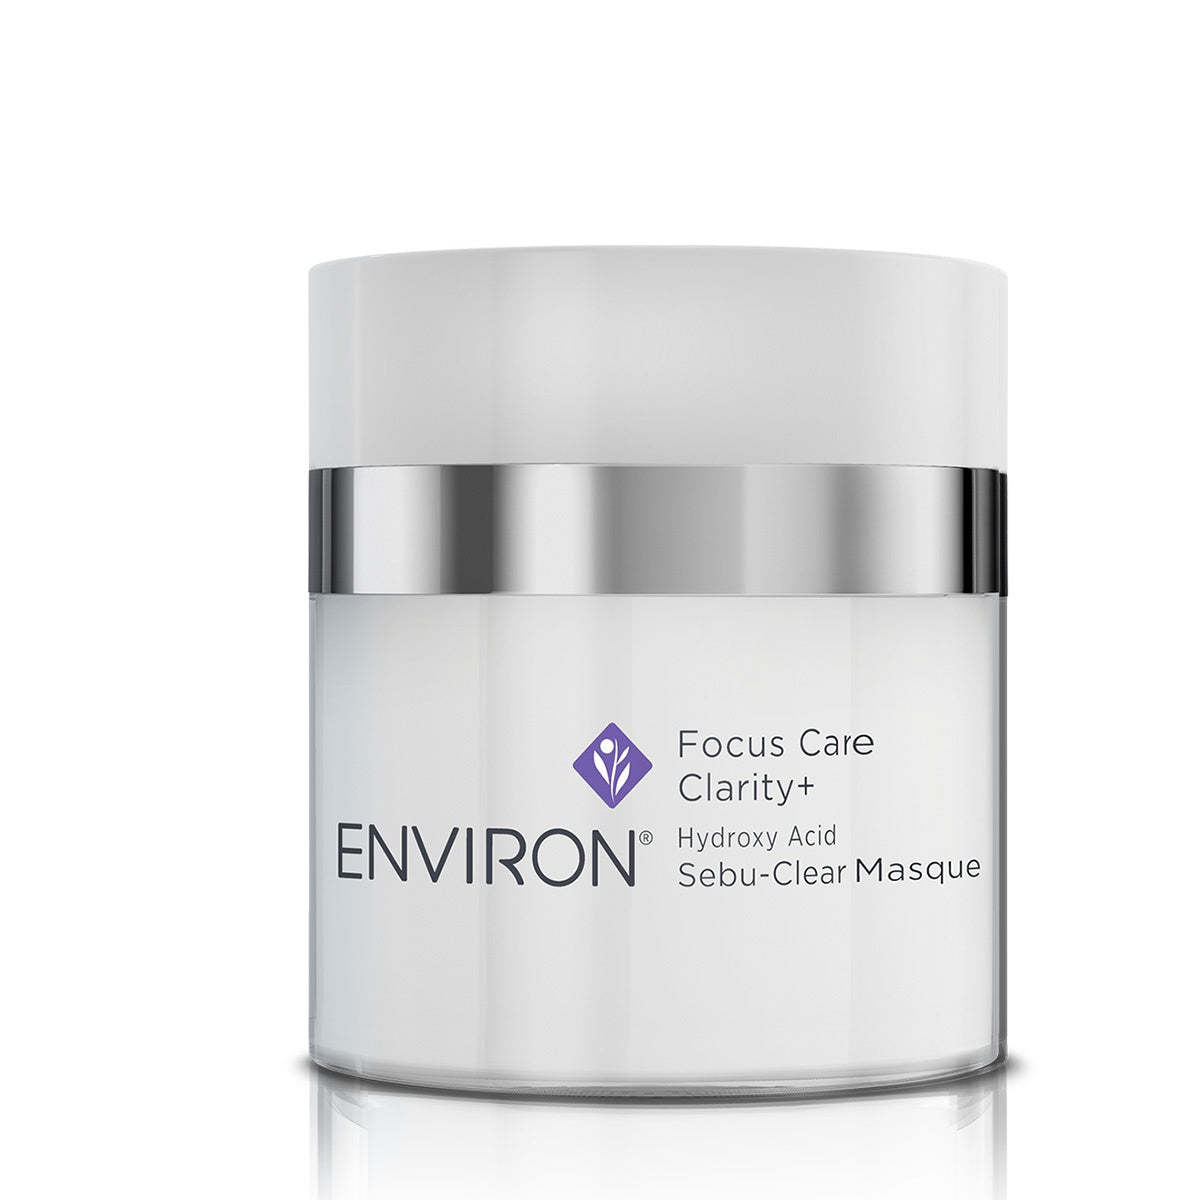 ENVIRON (Focus Care Clarity+) Hydroxy Acid Sebu-Clear Masque